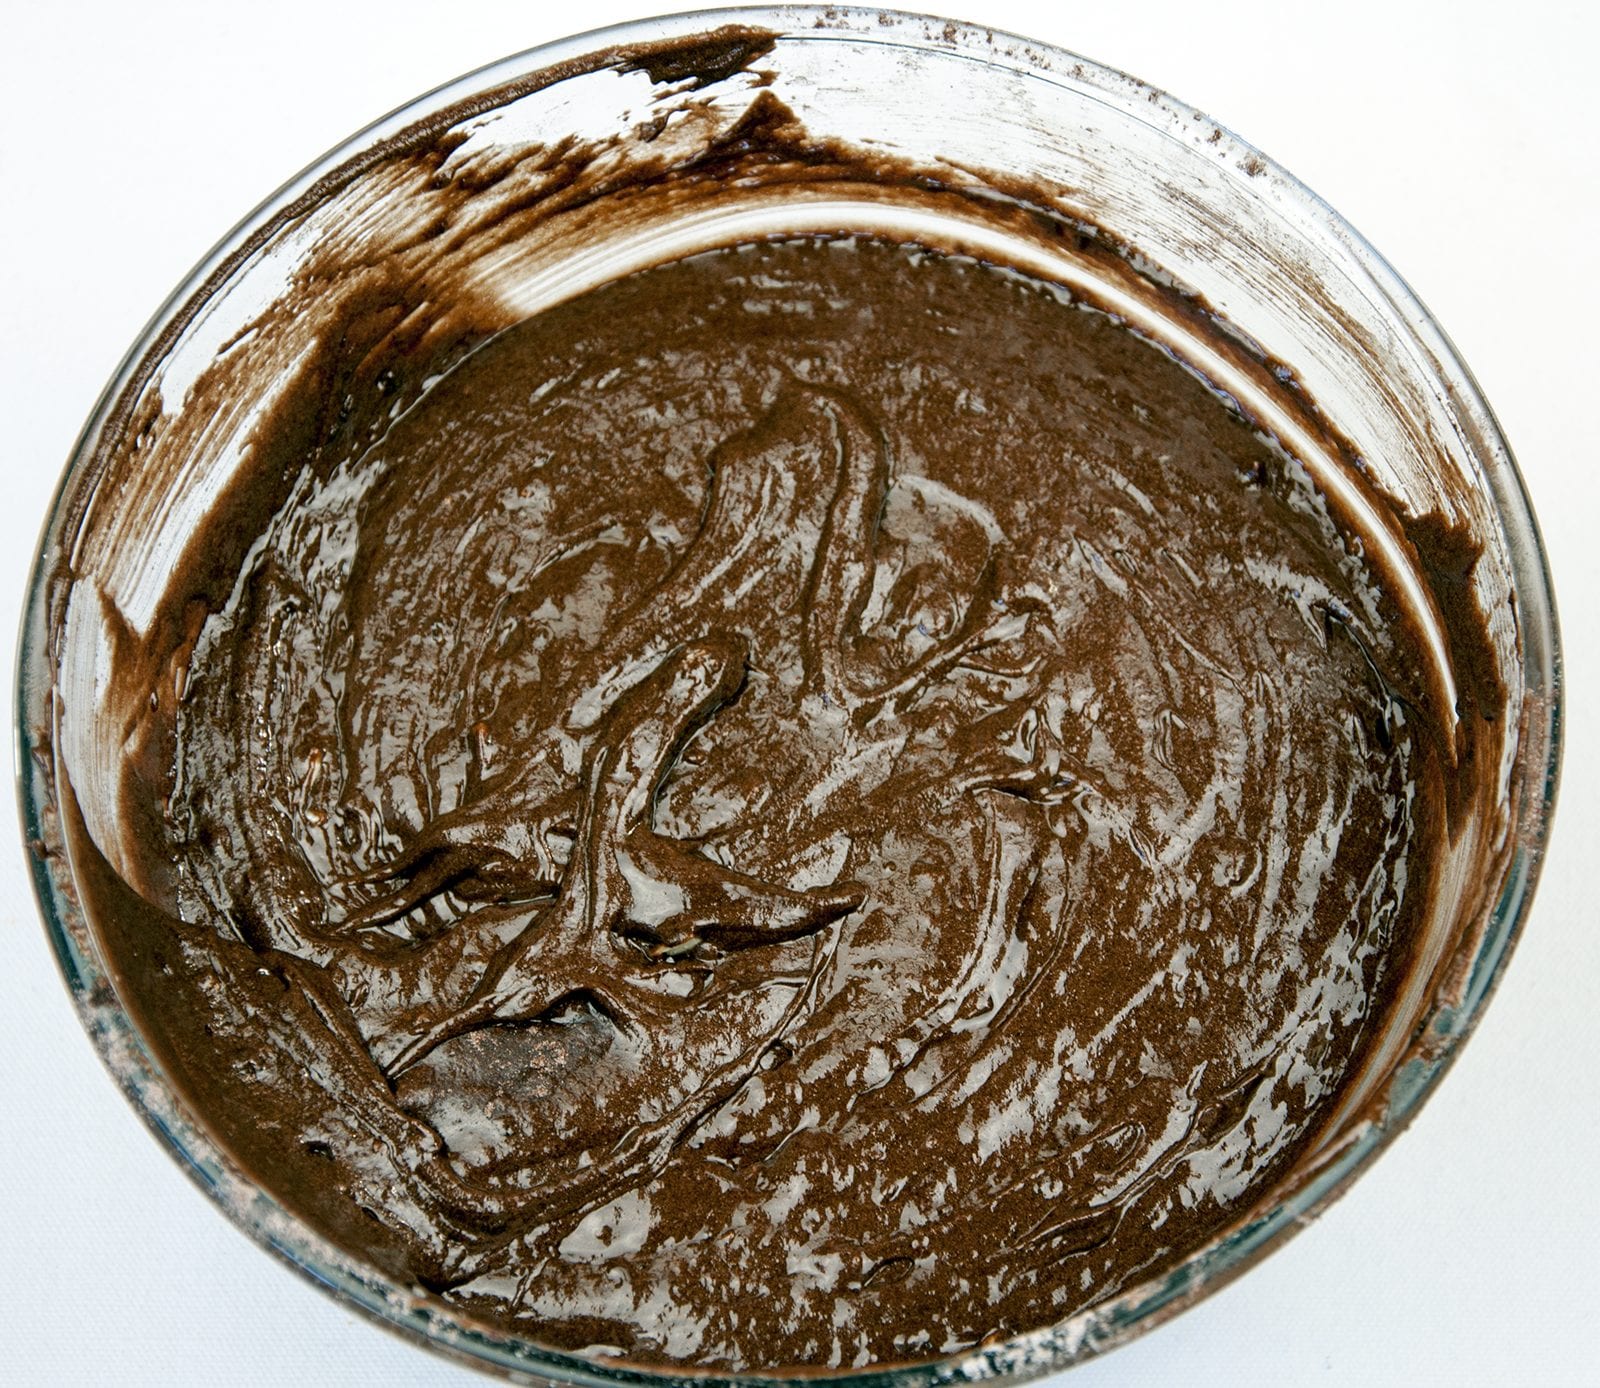 chocolate brownie mix